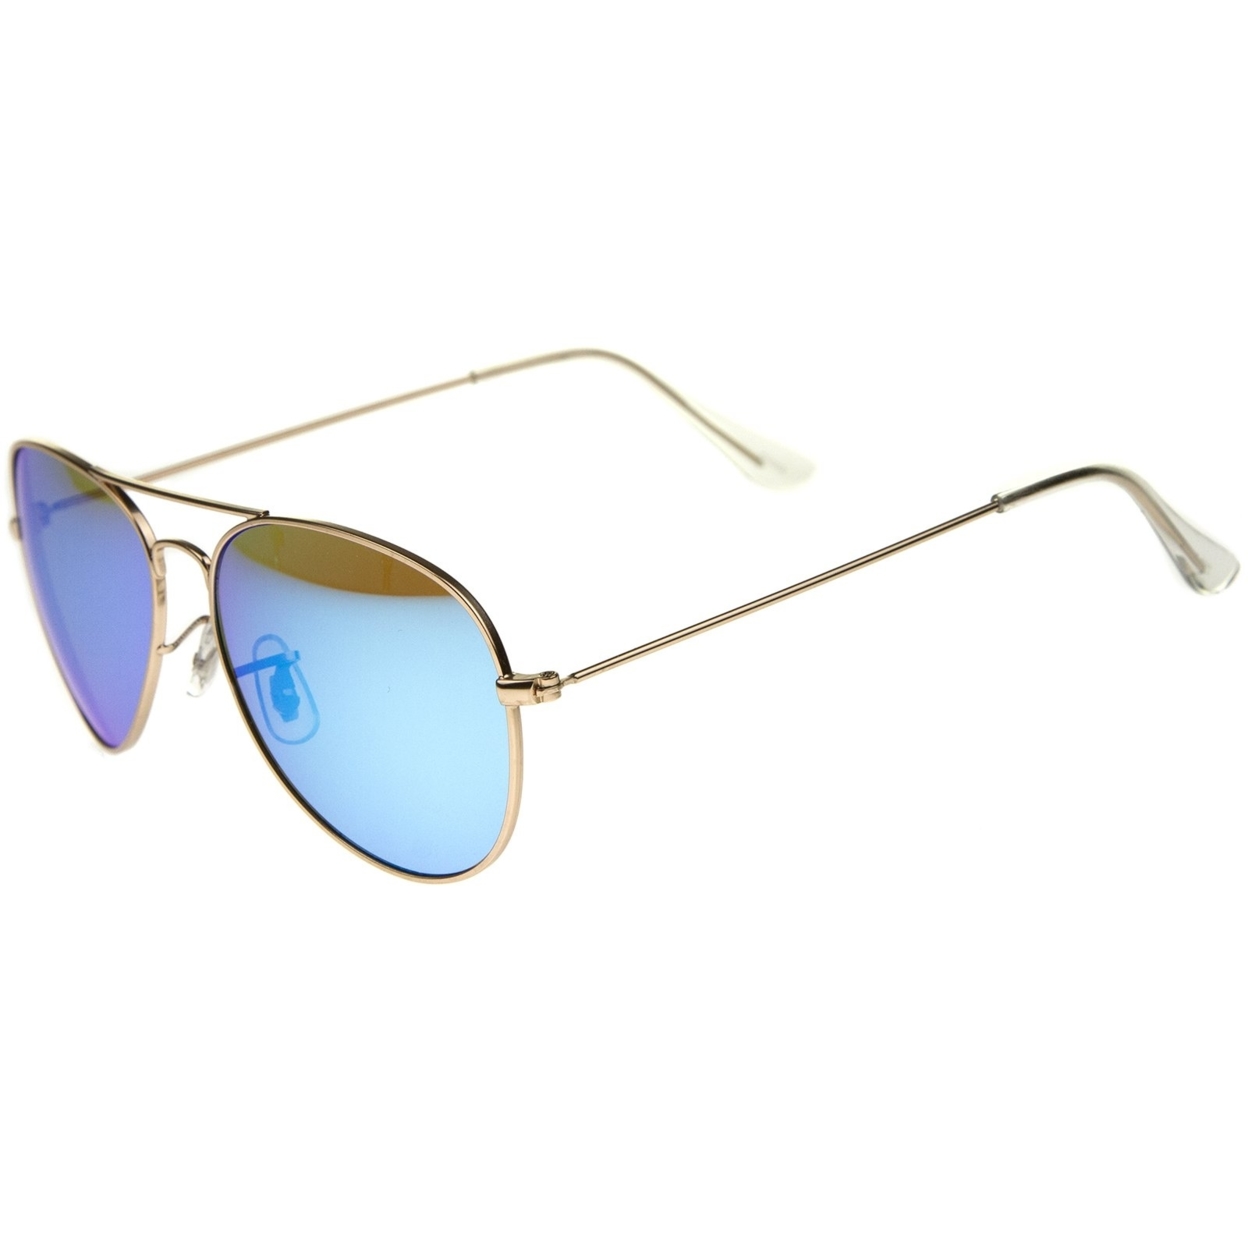 Premium Nickel Plated Frame Multi-Coated Mirror Lens Aviator Sunglasses 59mm - Gold / Blue Mirror